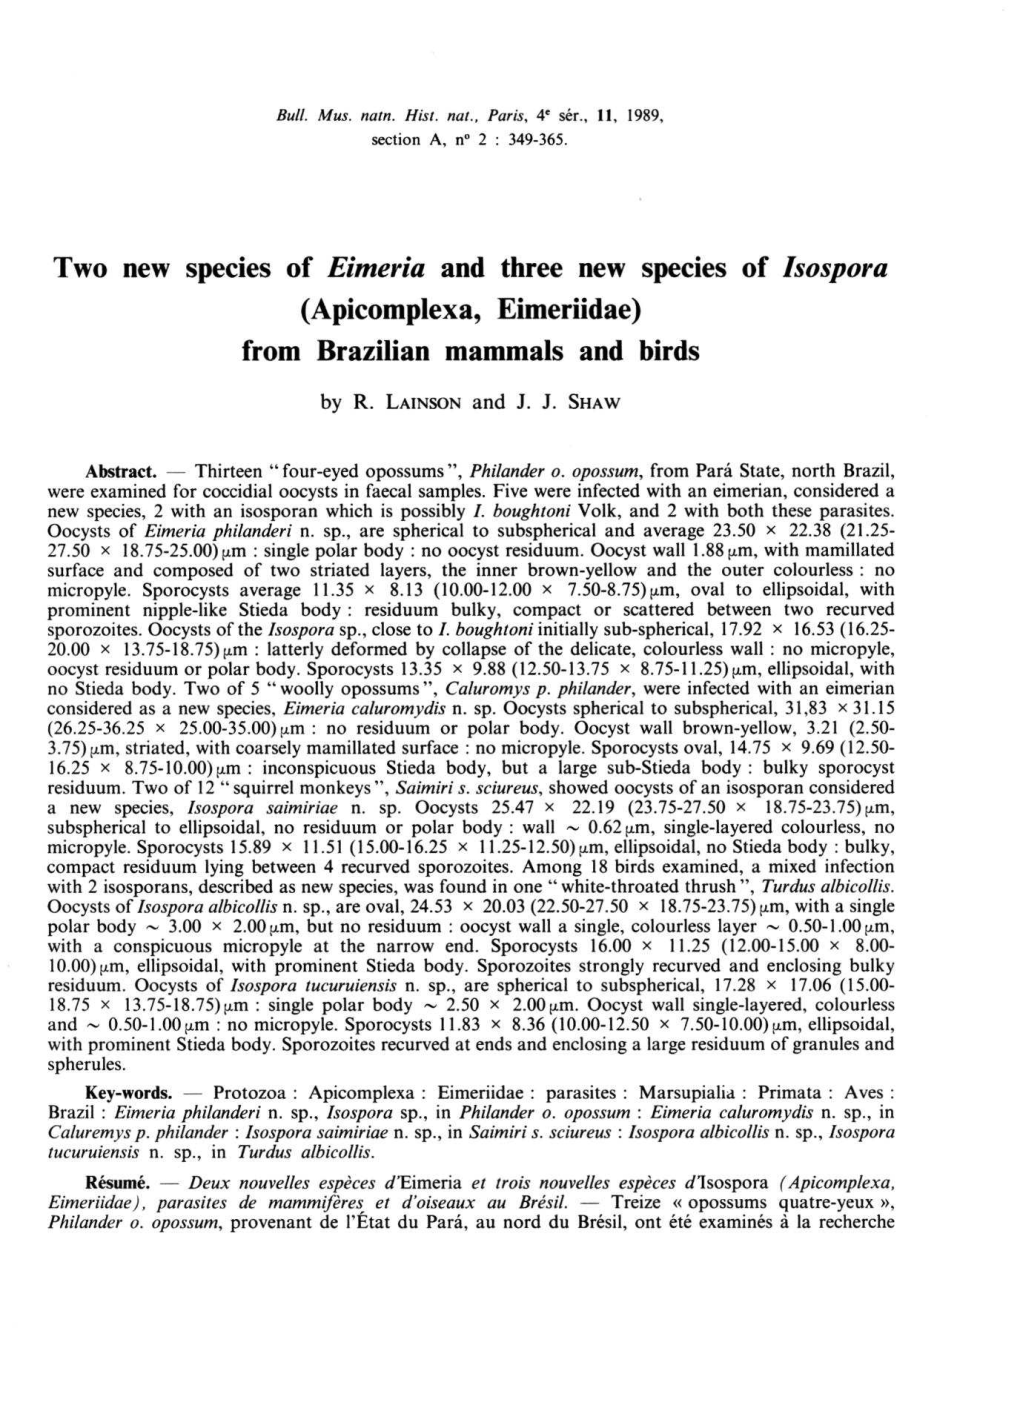 Two New Species of Eimeria and Three New Species of Isospora (Apicomplexa, Eimeriidae) from Brazilian Mammals and Birds